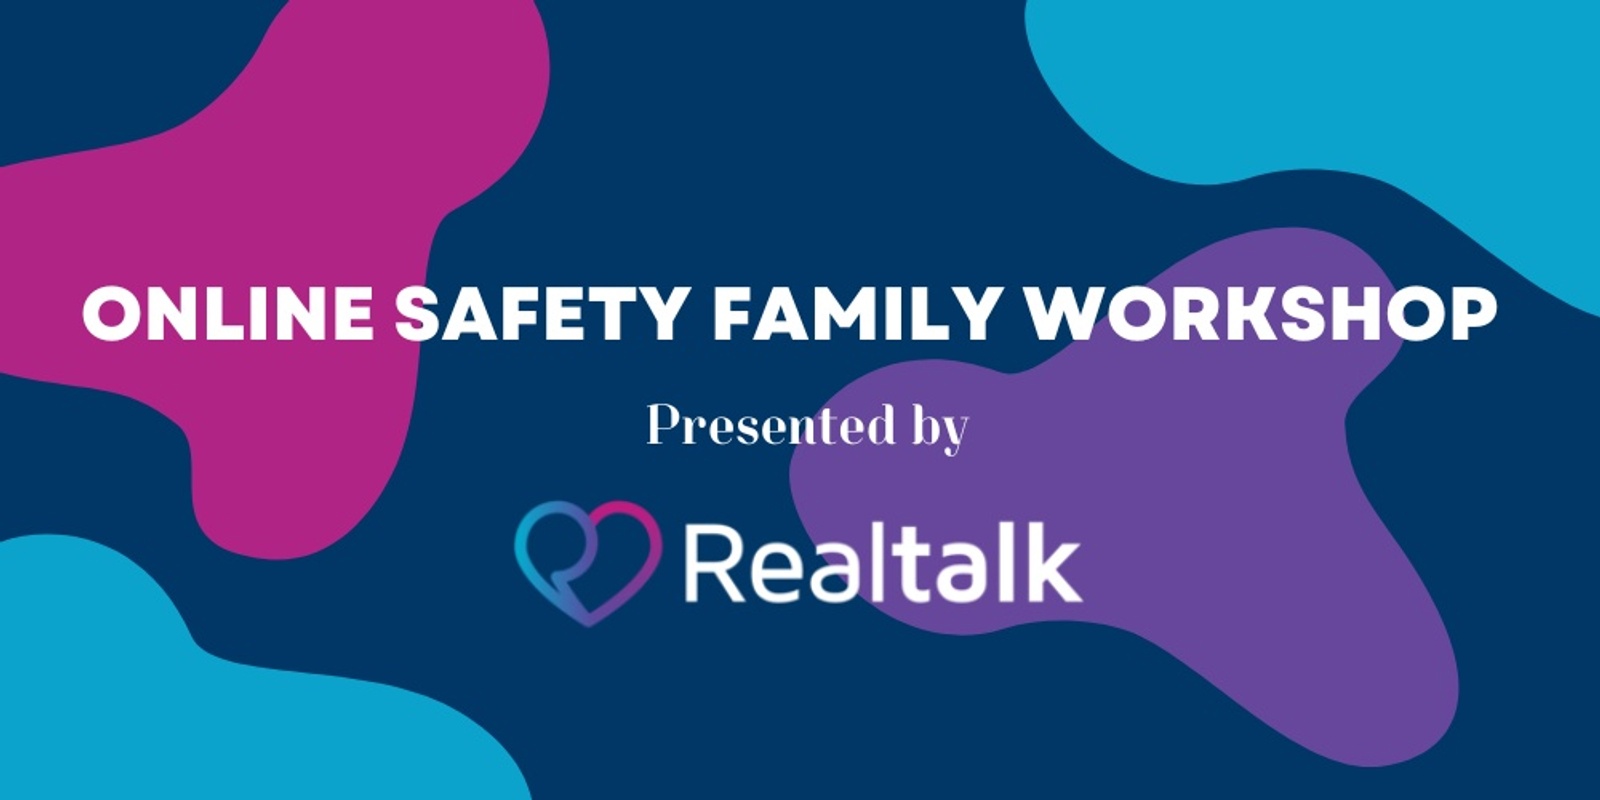 Online Safety Family Workshop Presented by RealTalk